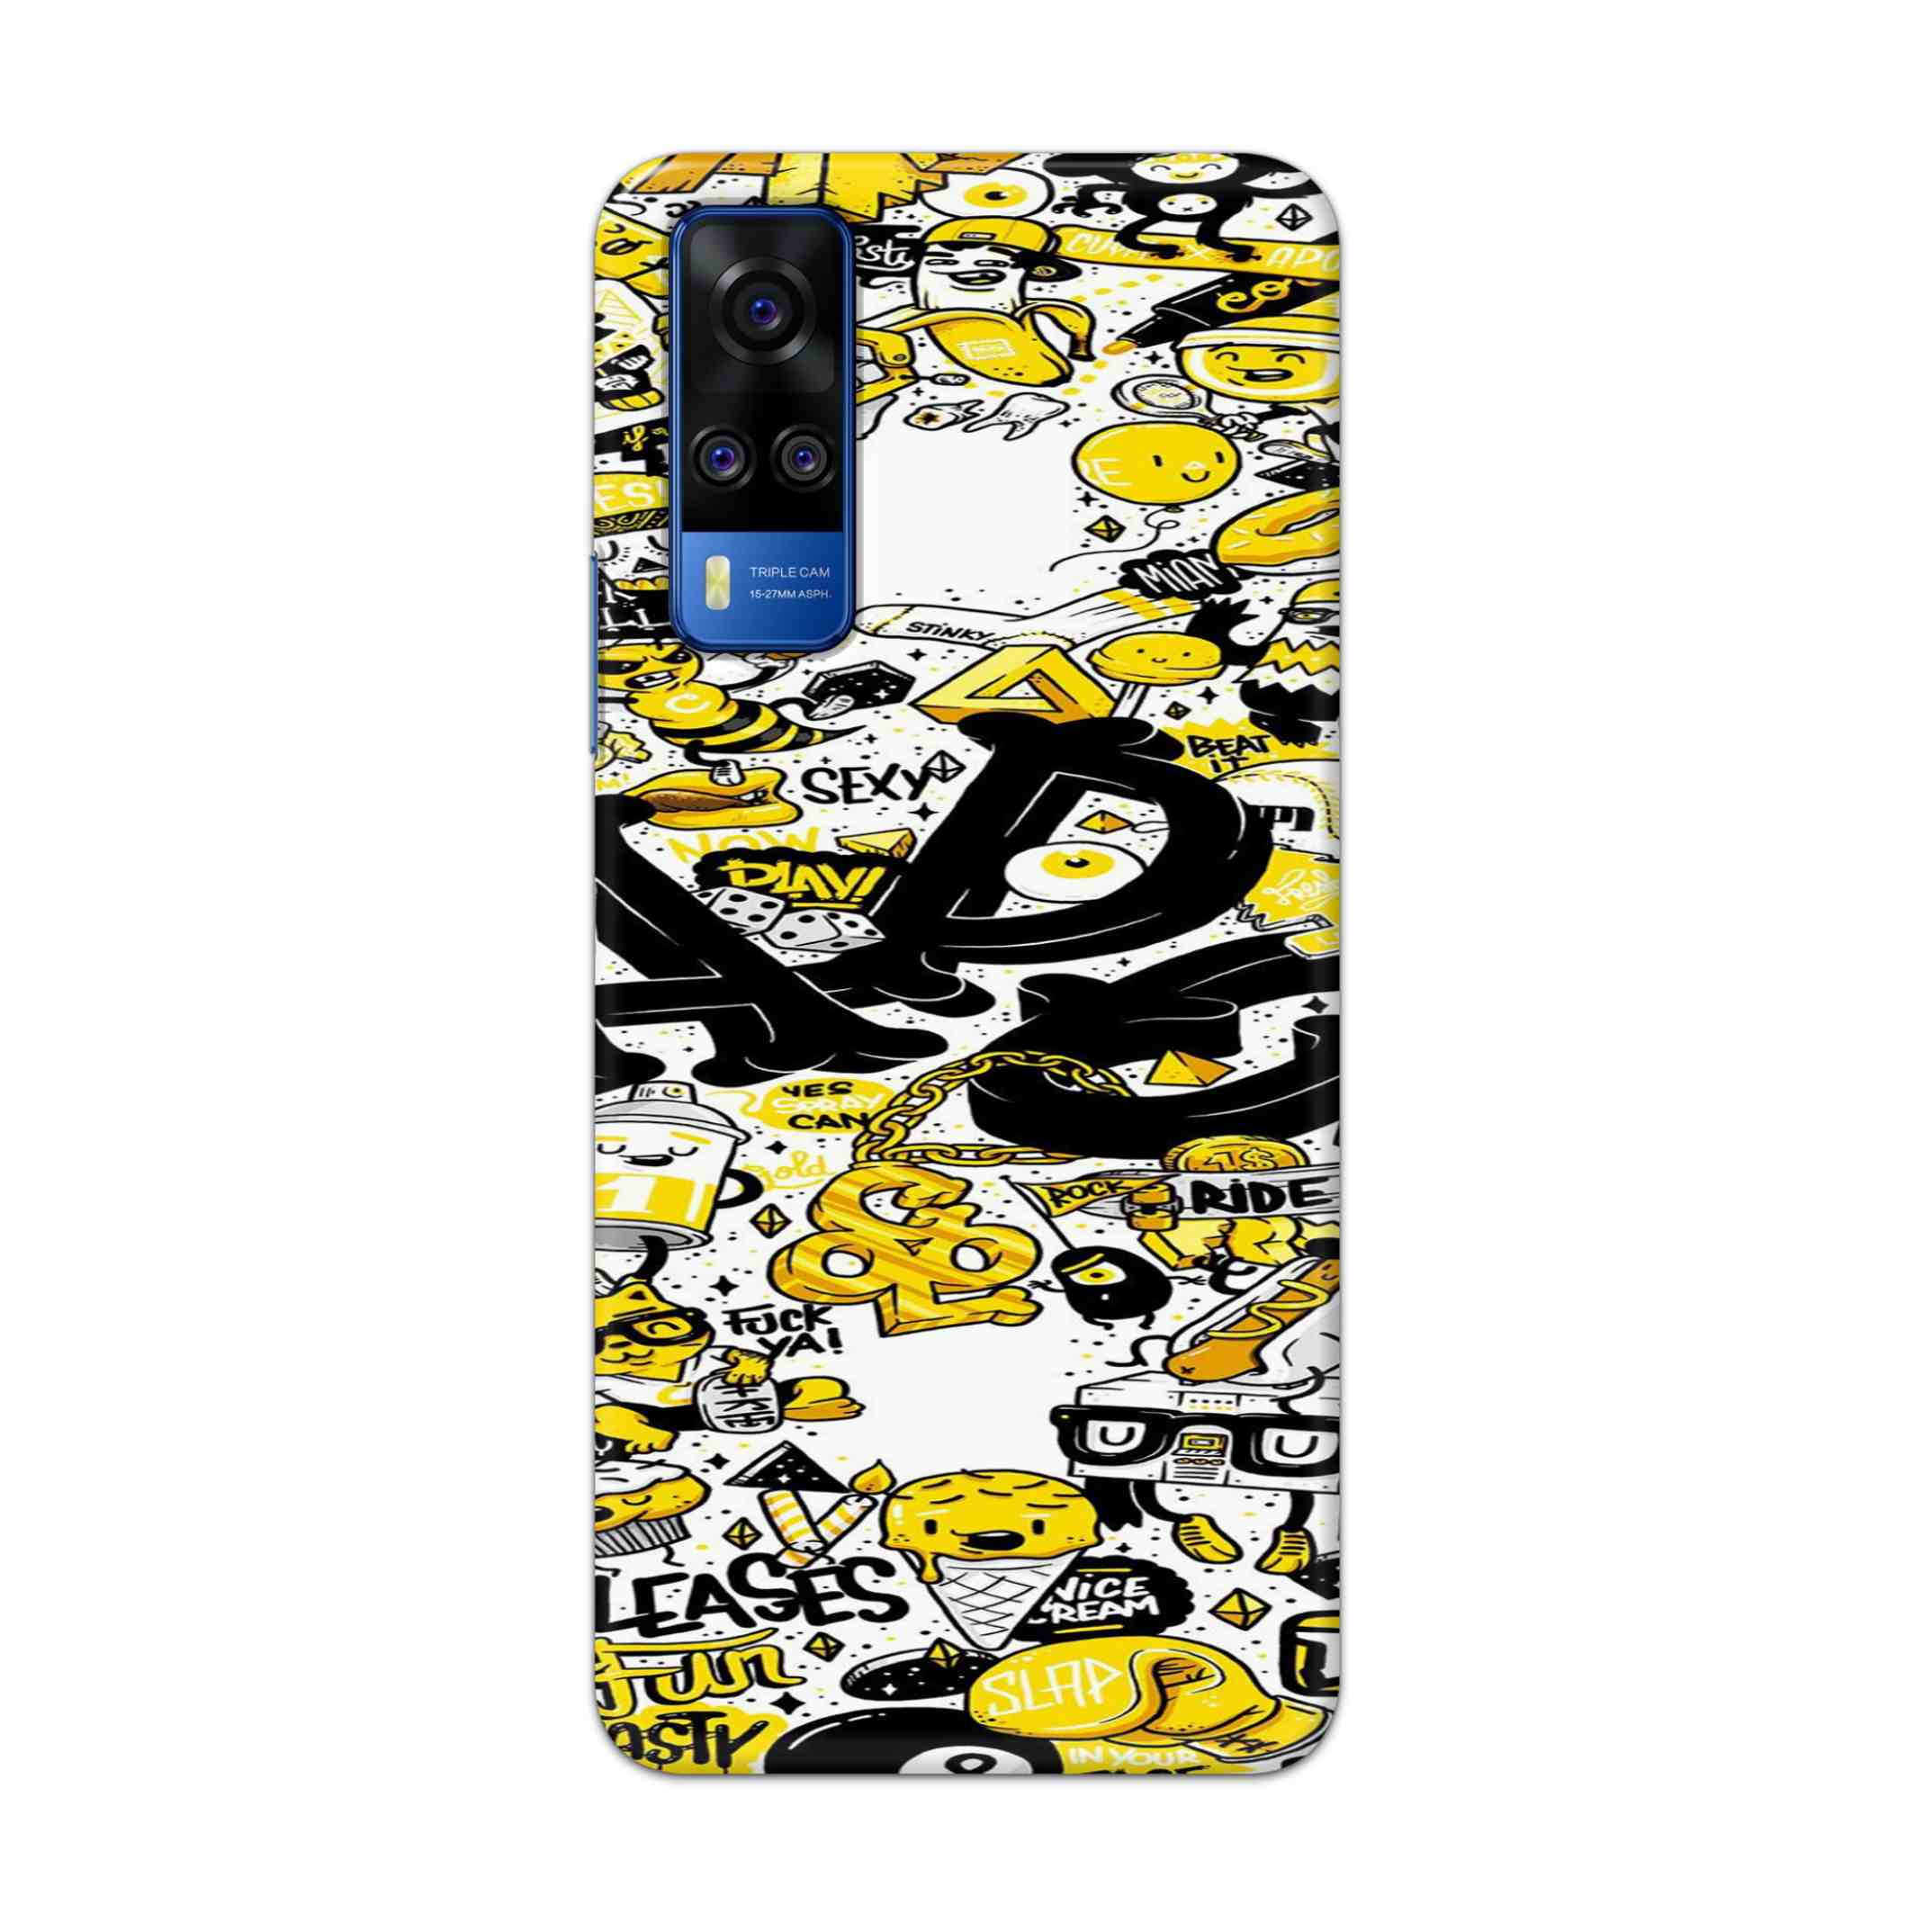 Buy Ado Hard Back Mobile Phone Case Cover For Vivo Y51a Online